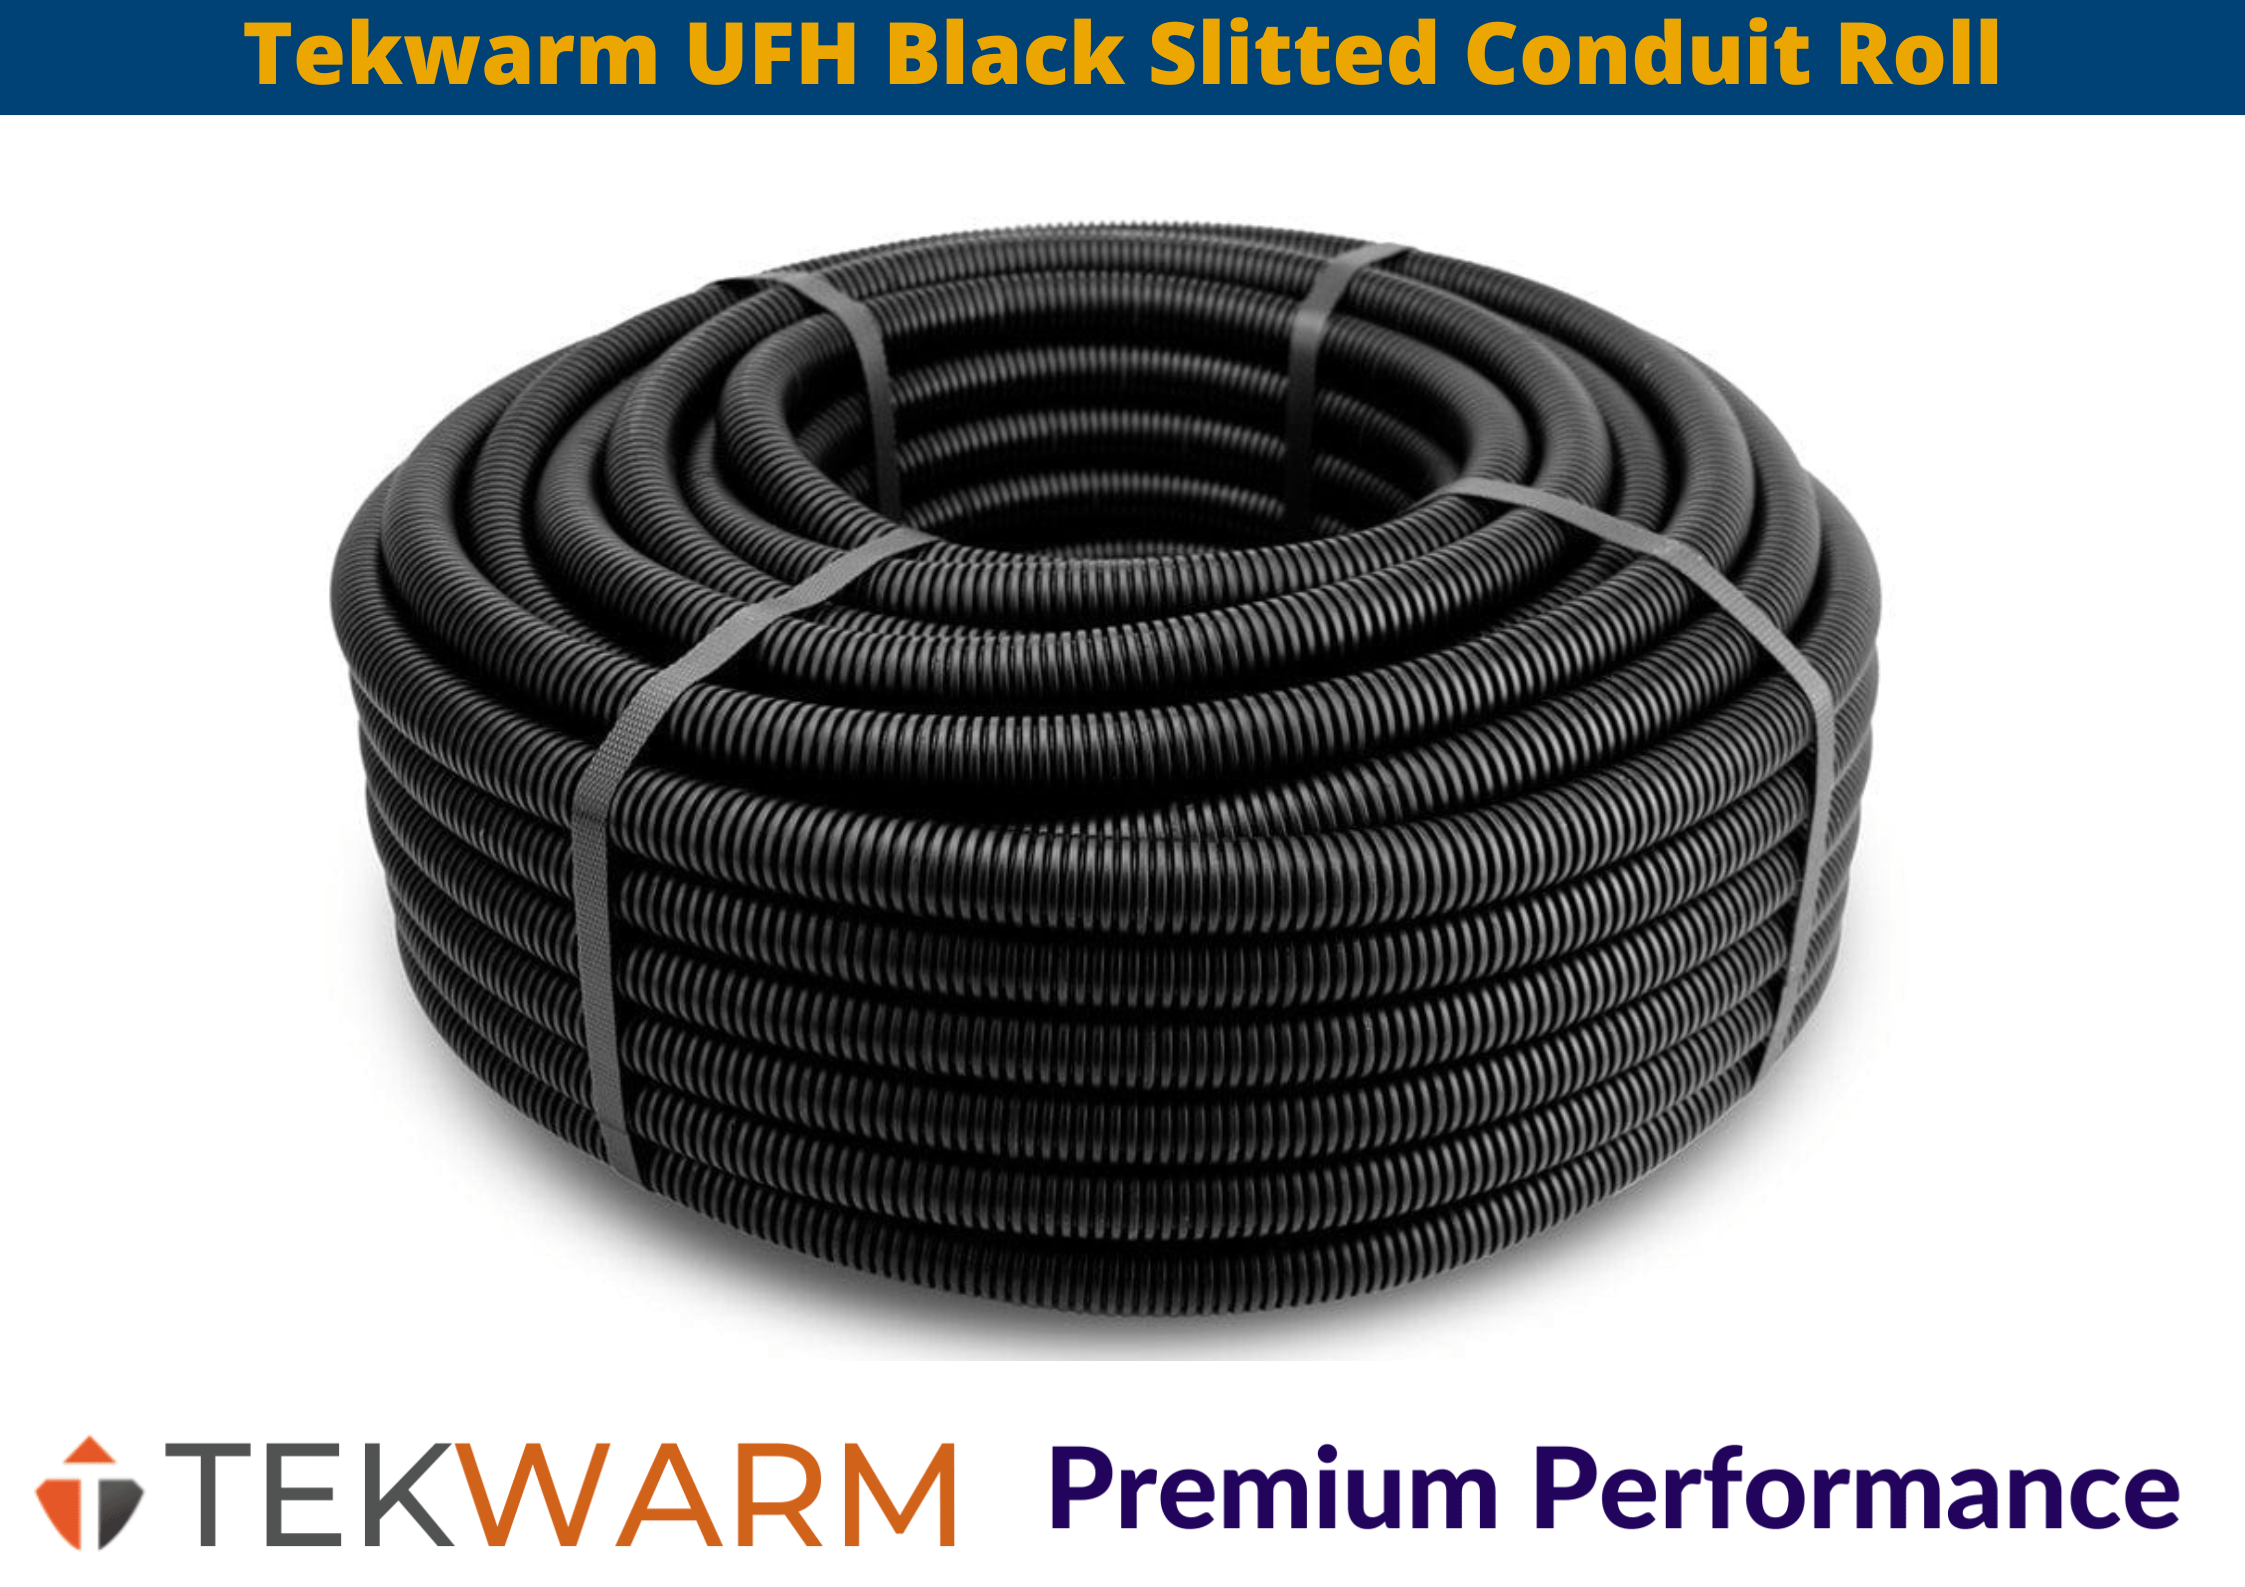 Tekwarm Tekwarm UFH Black Slitted Conduit Roll 50m coil IUK01494 Tekwarm UFH Black Slitted Conduit Roll 50m coil | insulationuk.co.uk